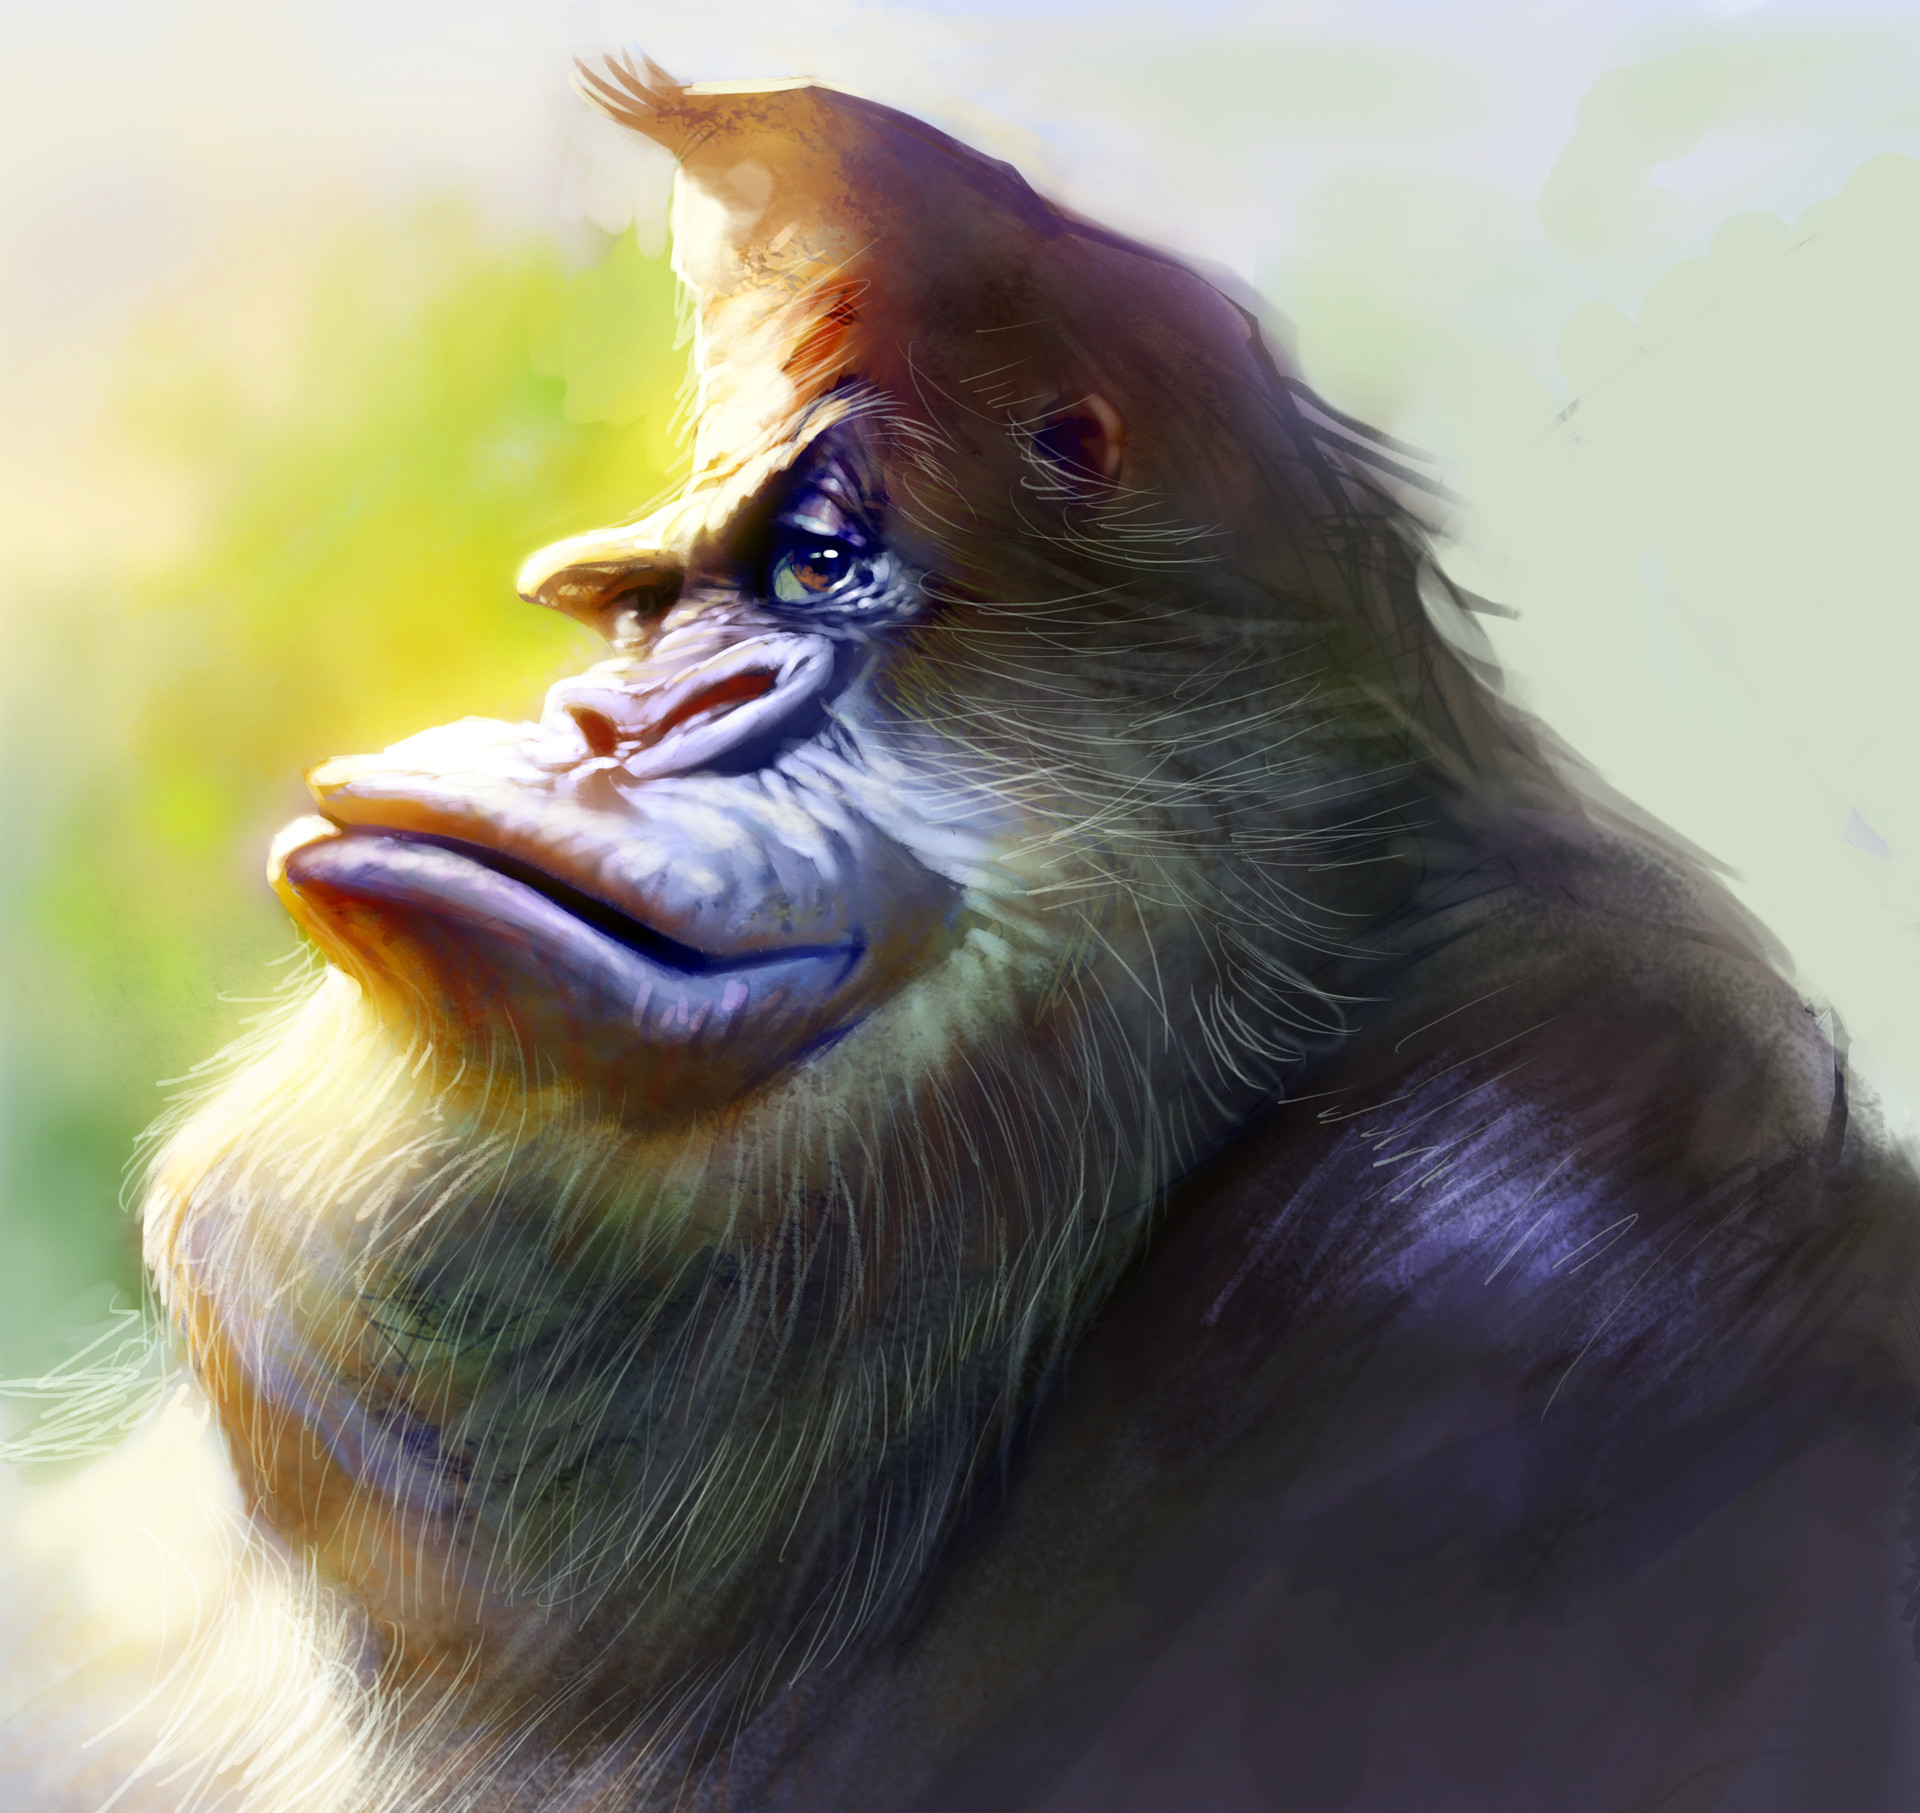 lu-rojas-gorilla